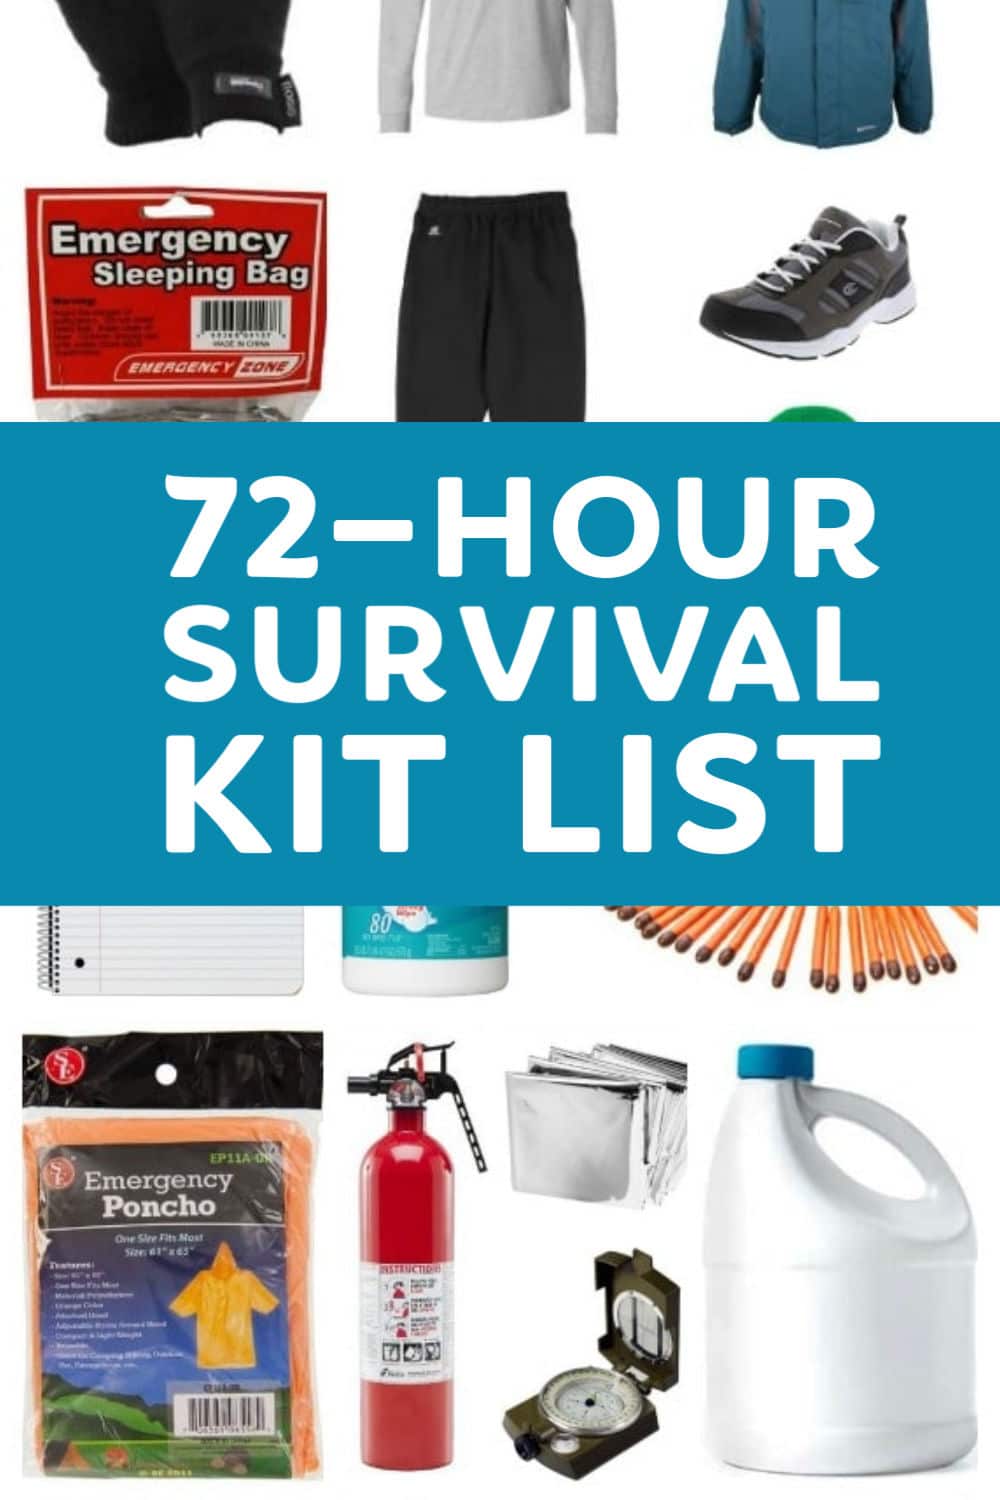 Emergency survival kit list